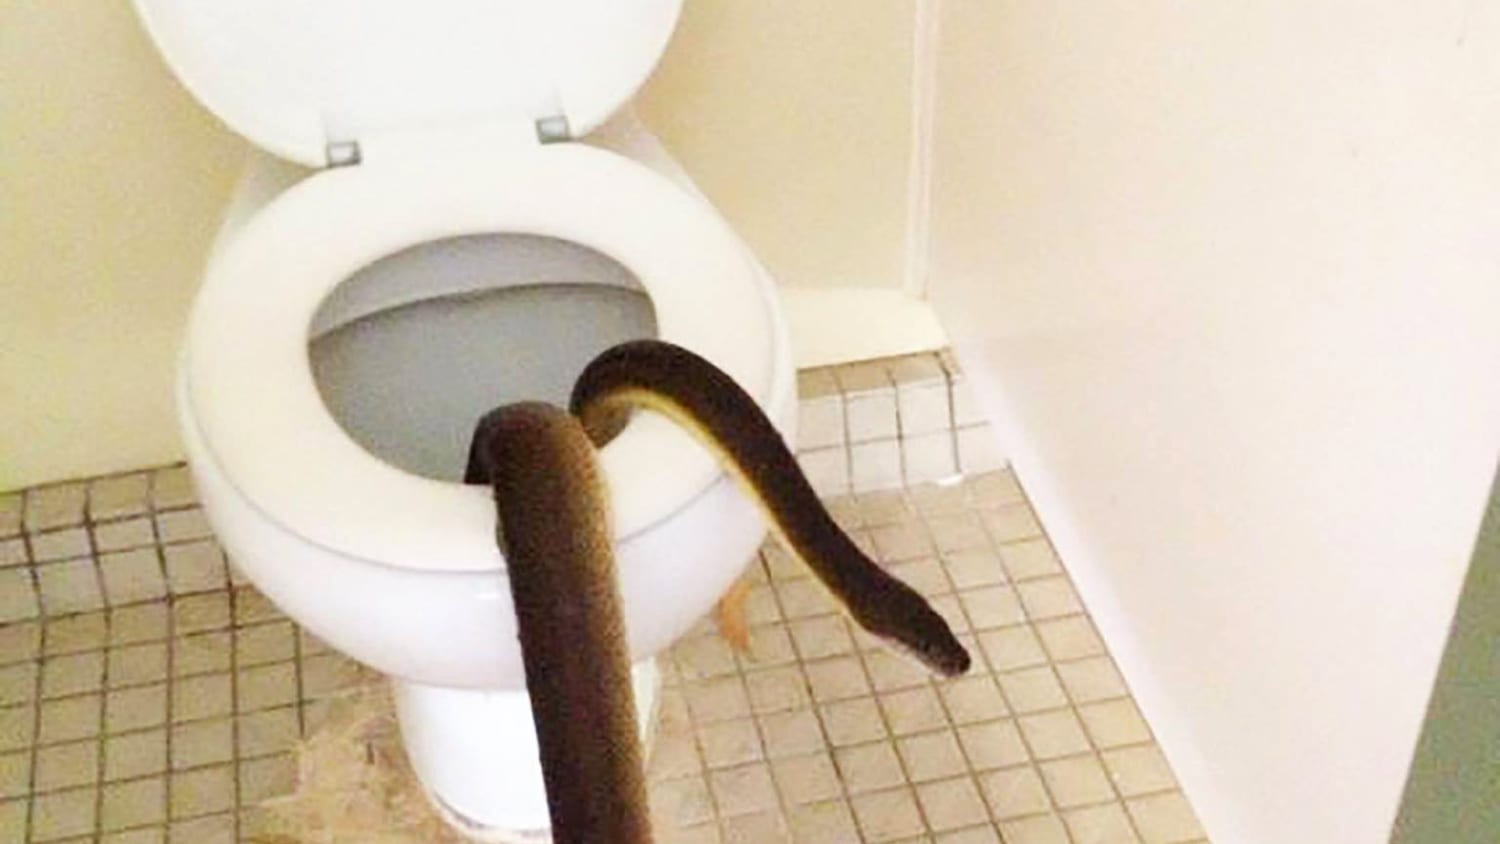 https://media-cldnry.s-nbcnews.com/image/upload/newscms/2016_19/1086896/snake-in-toilet-tease-today-160513.jpg